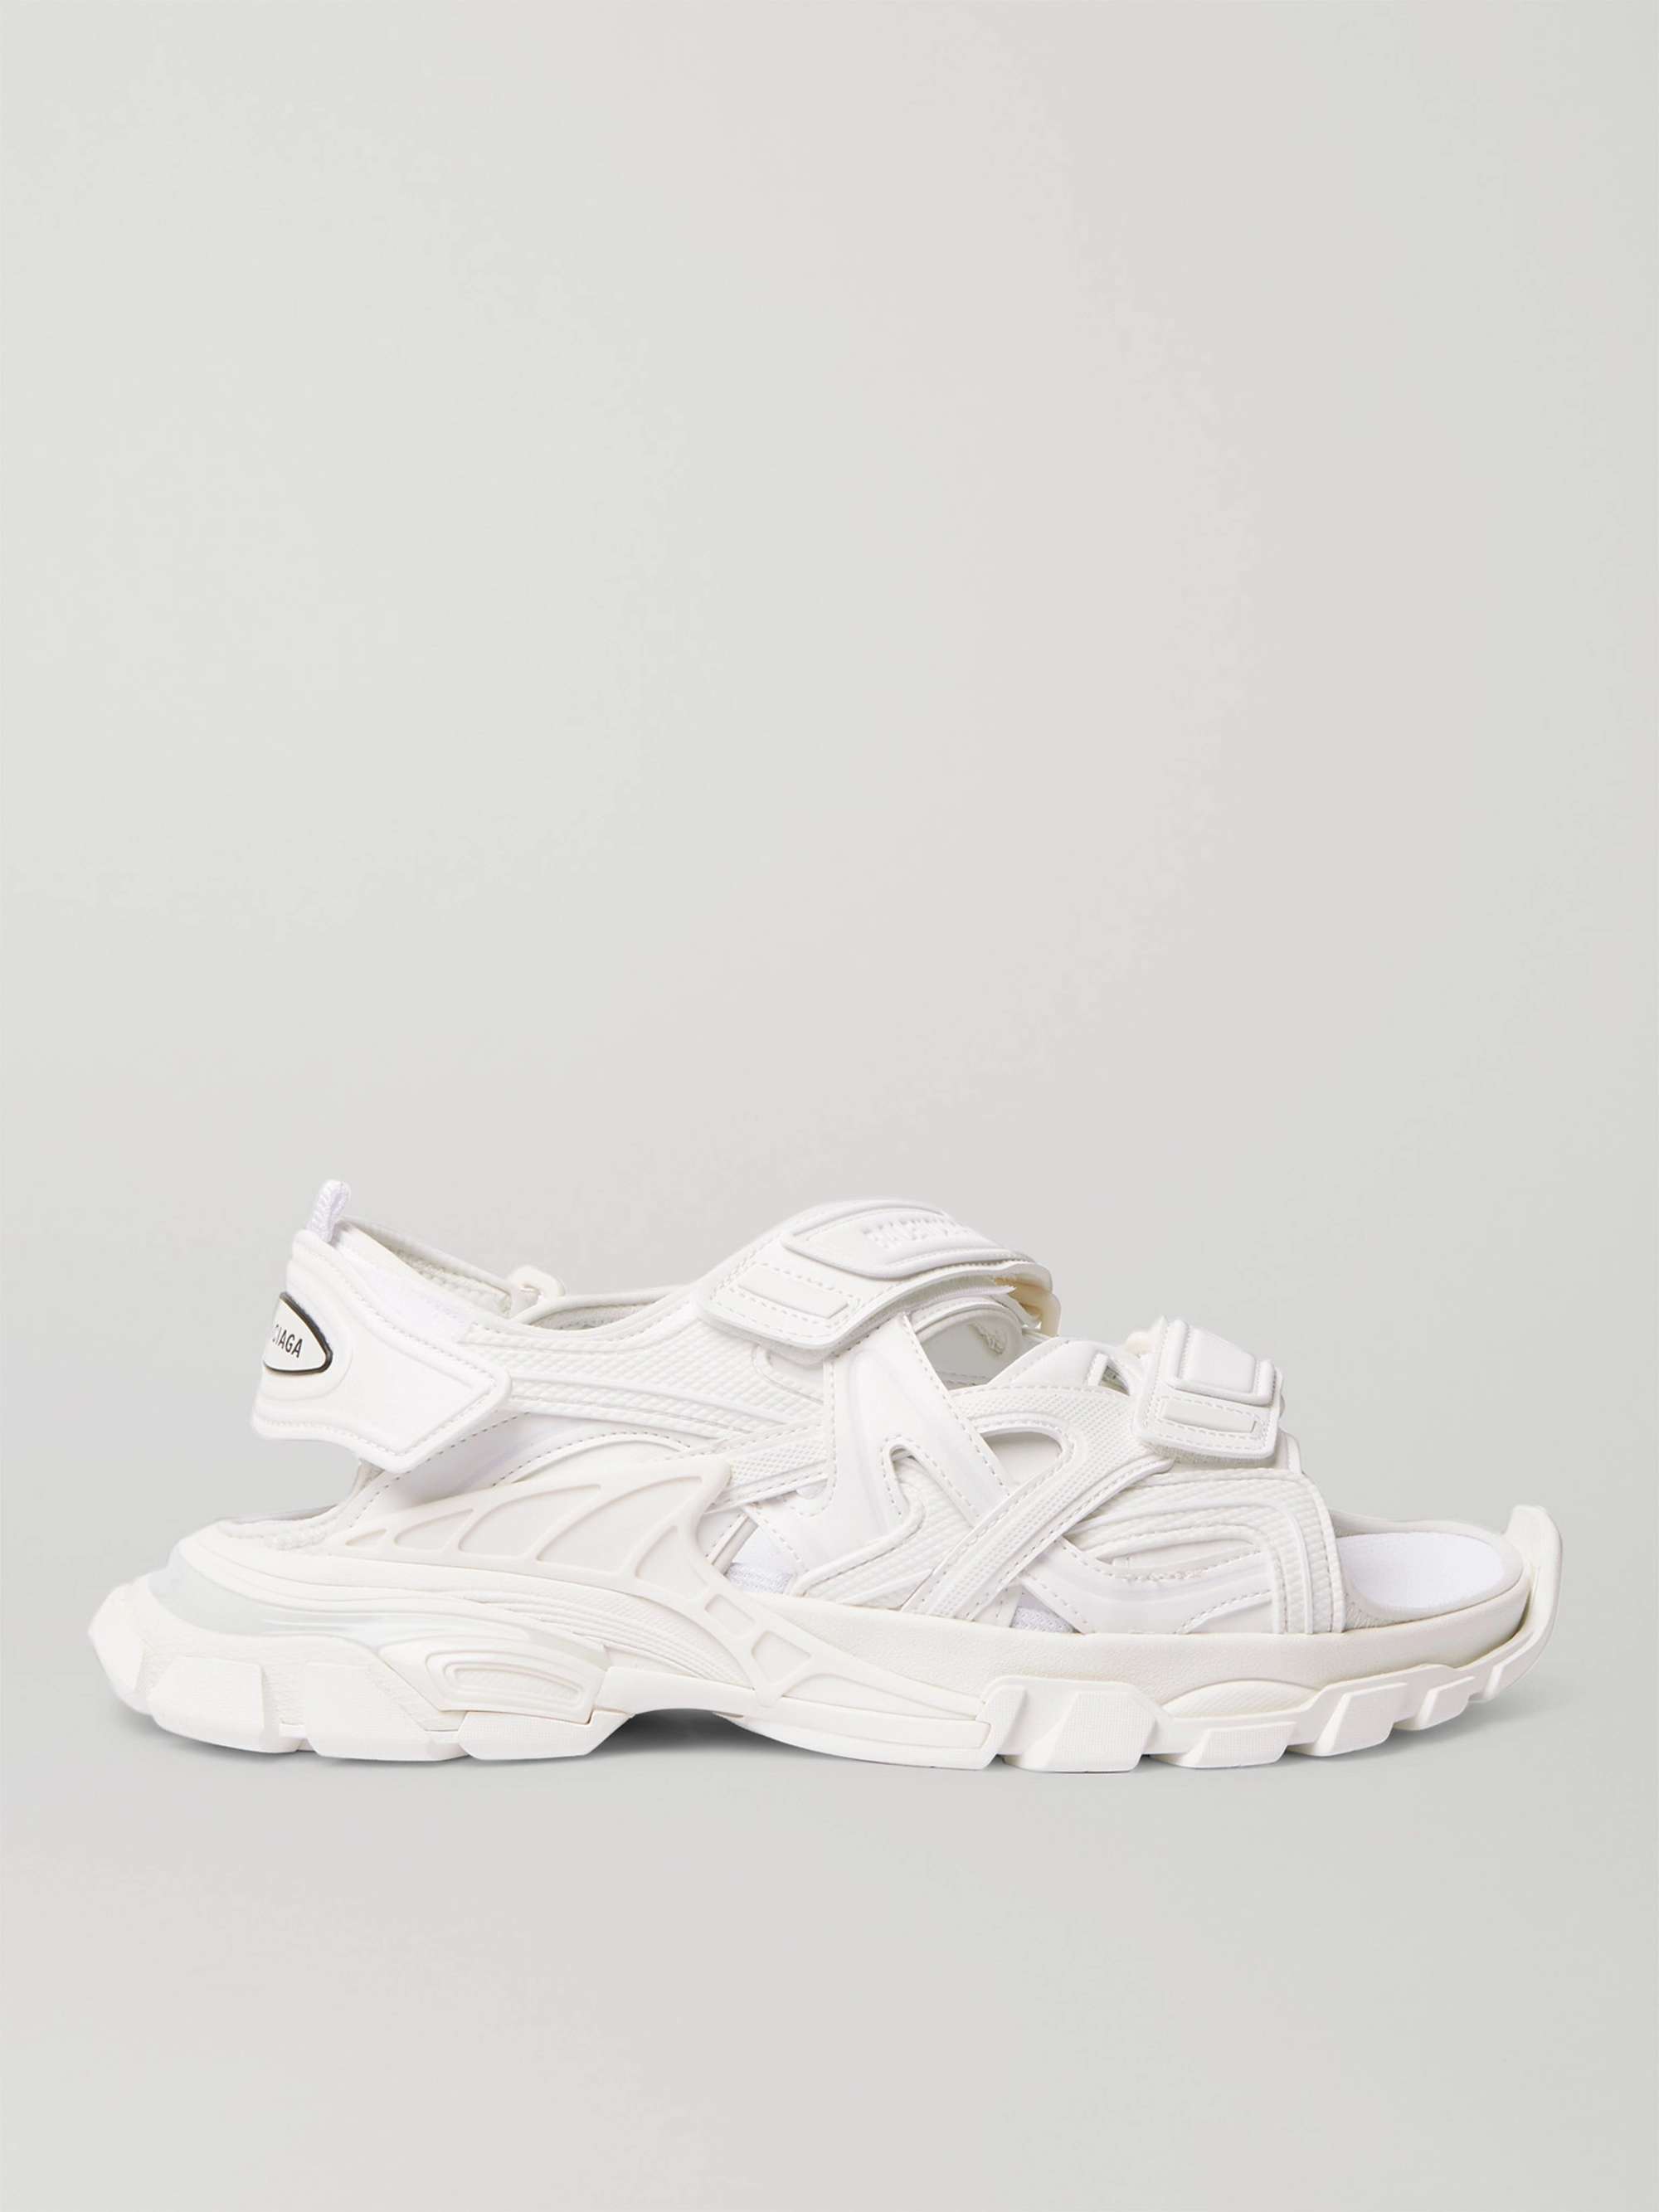 Balenciaga Logo Printed Slides Leather White Sandals 500573 EU 39  eBay